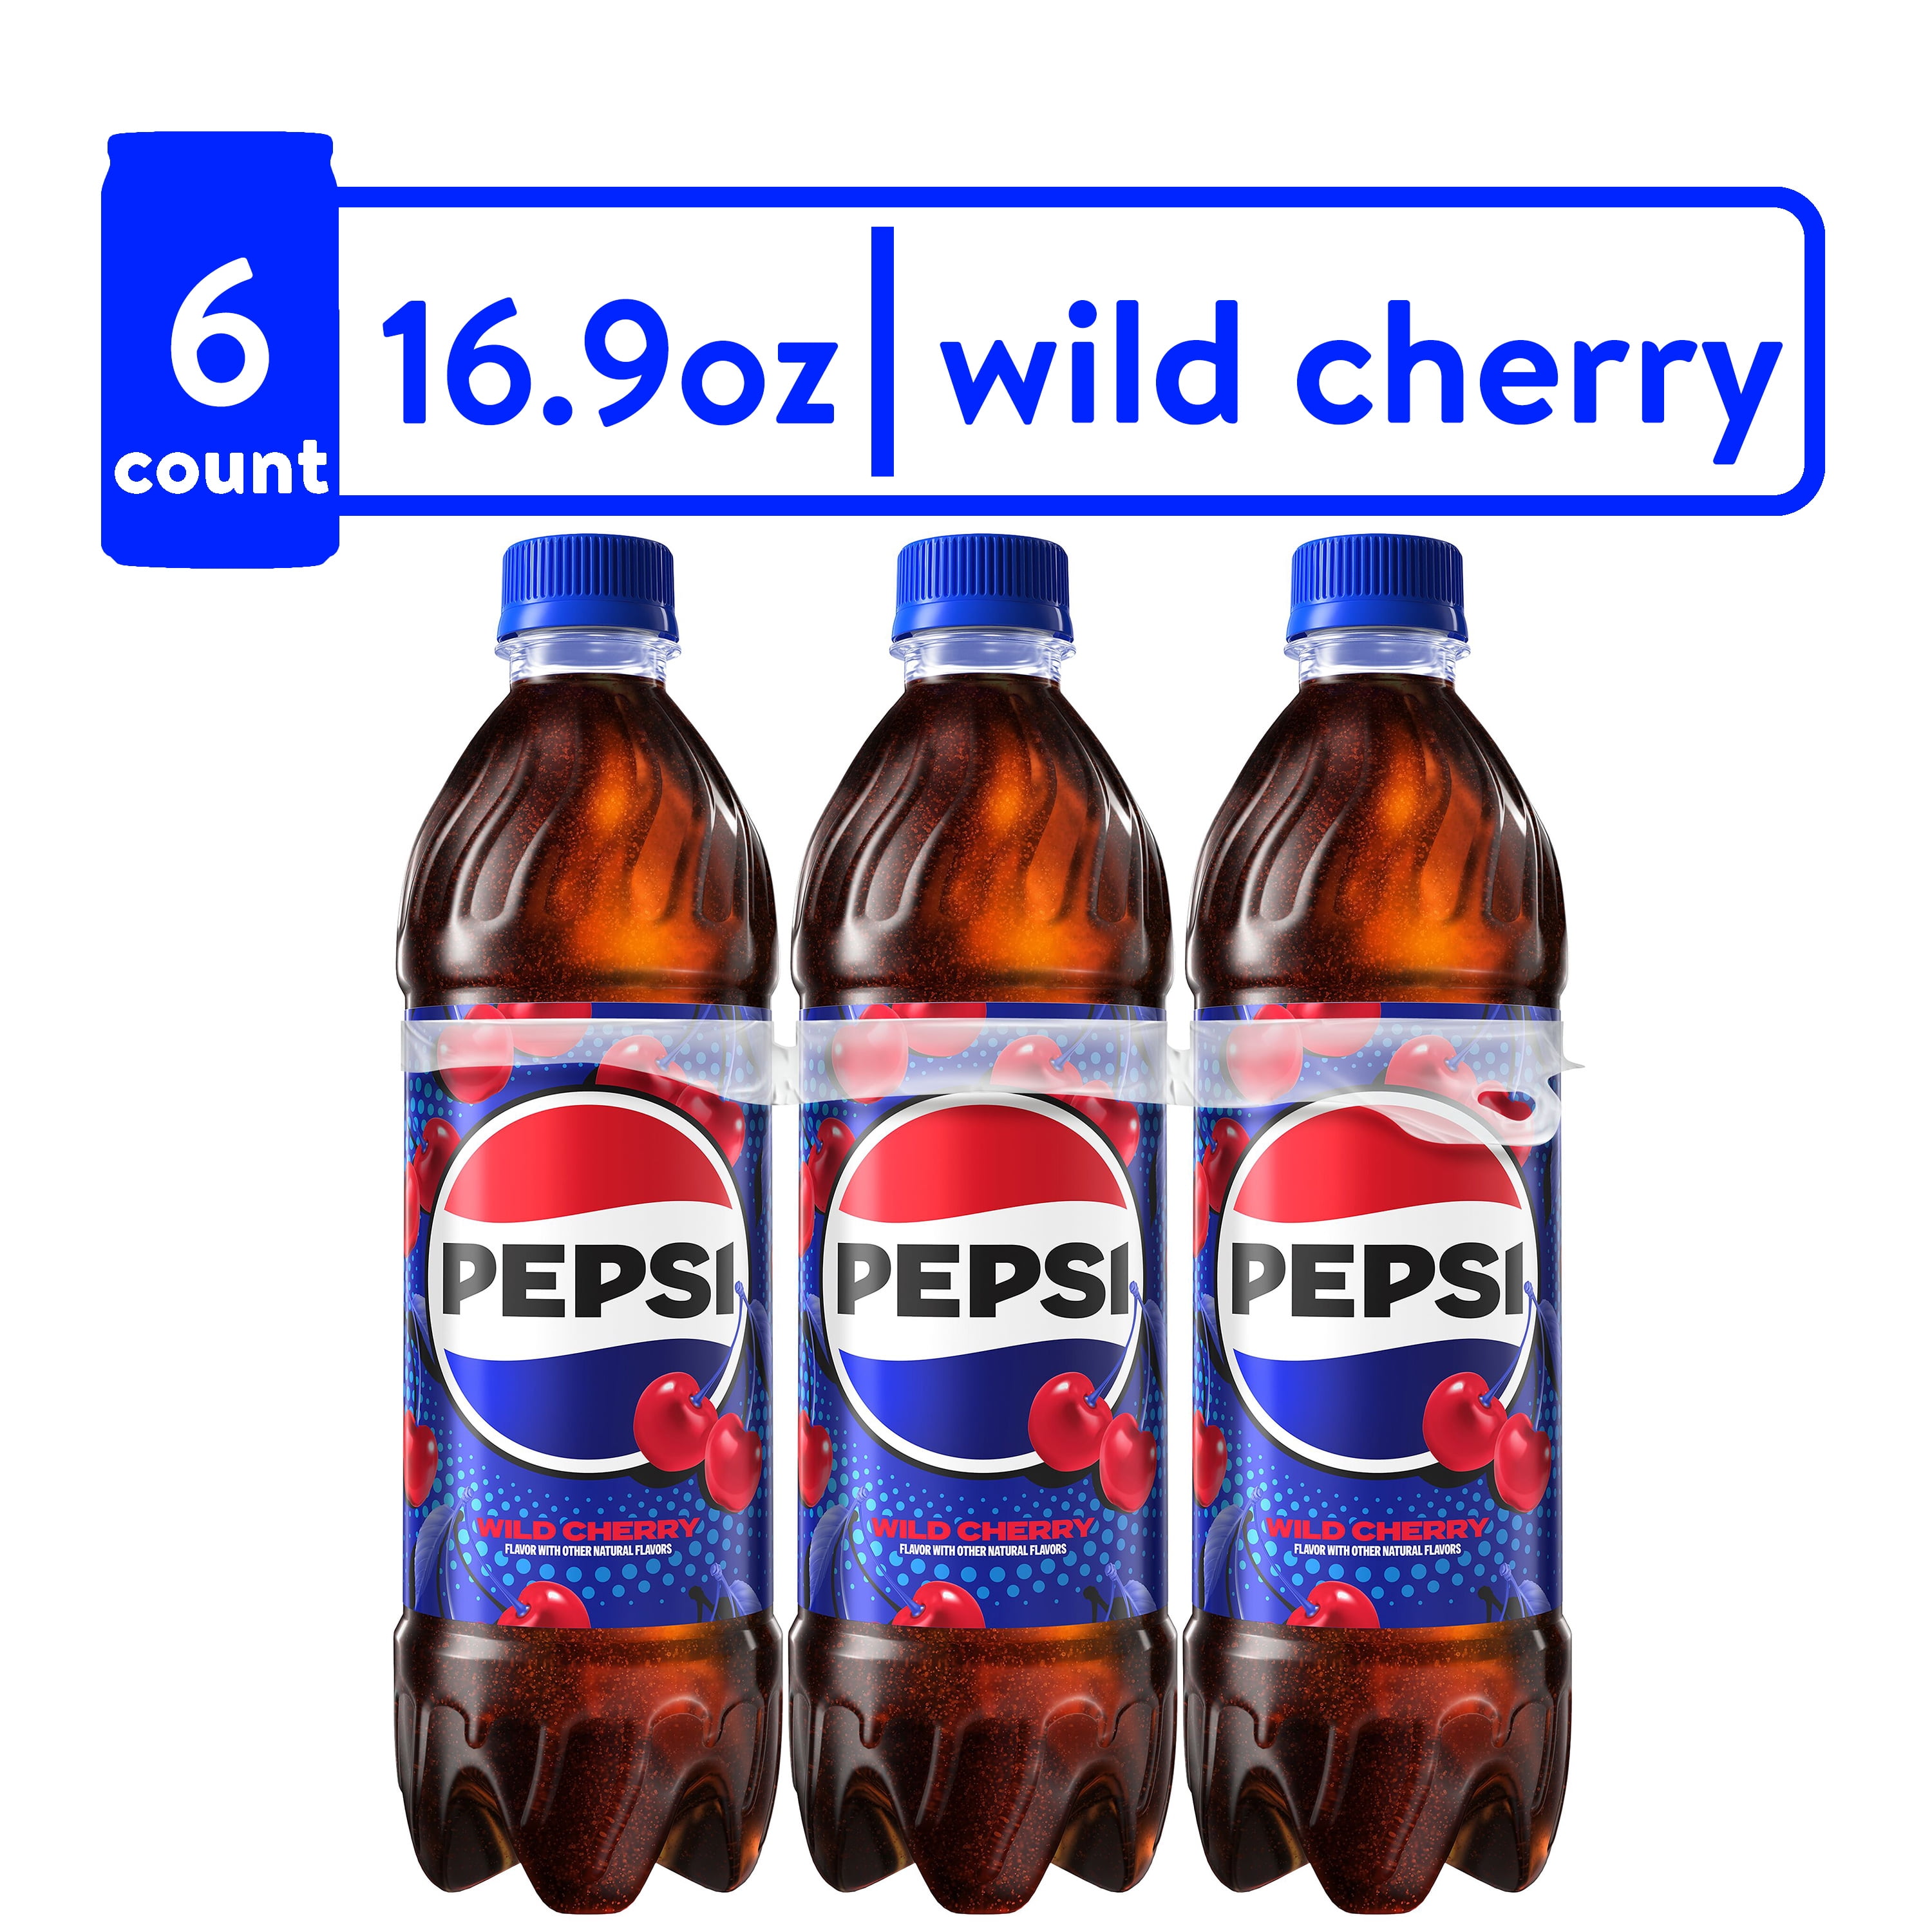 Pepsi Wild Cherry Cola Soda Pop, 16.9 fl oz, Pack Bottles